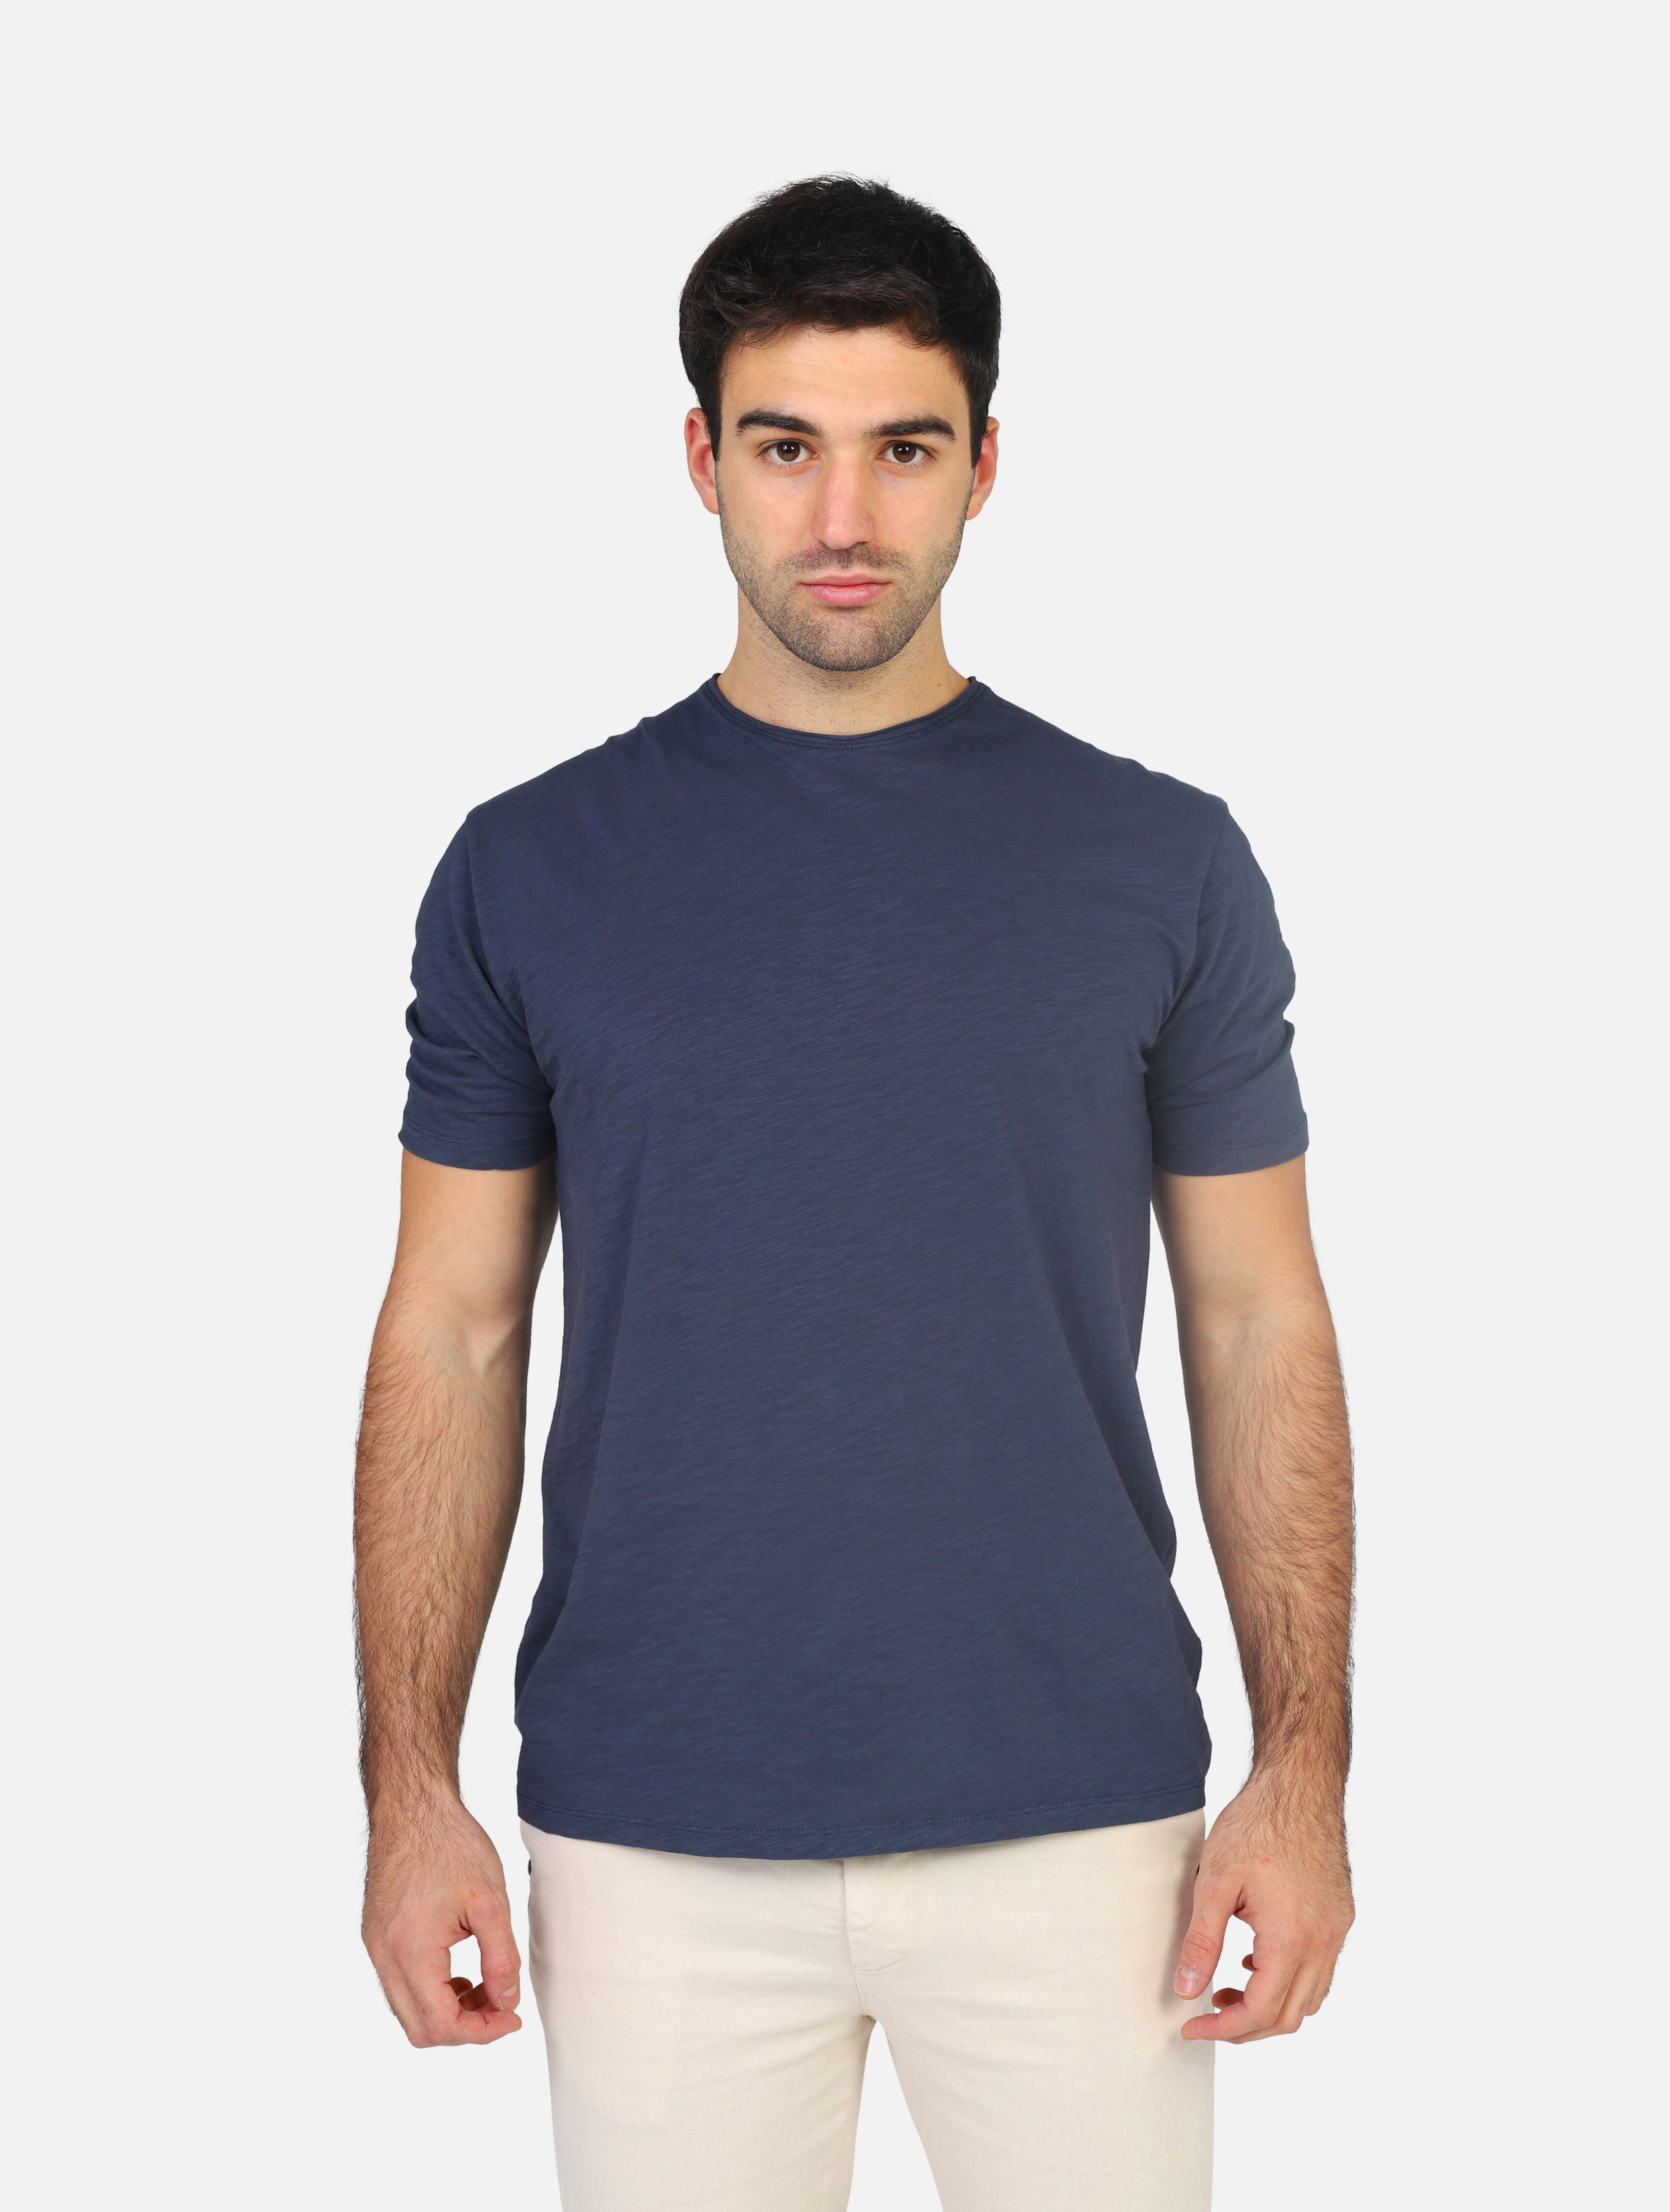 T-shirt gianni lupo  deep blue uomo  - 1